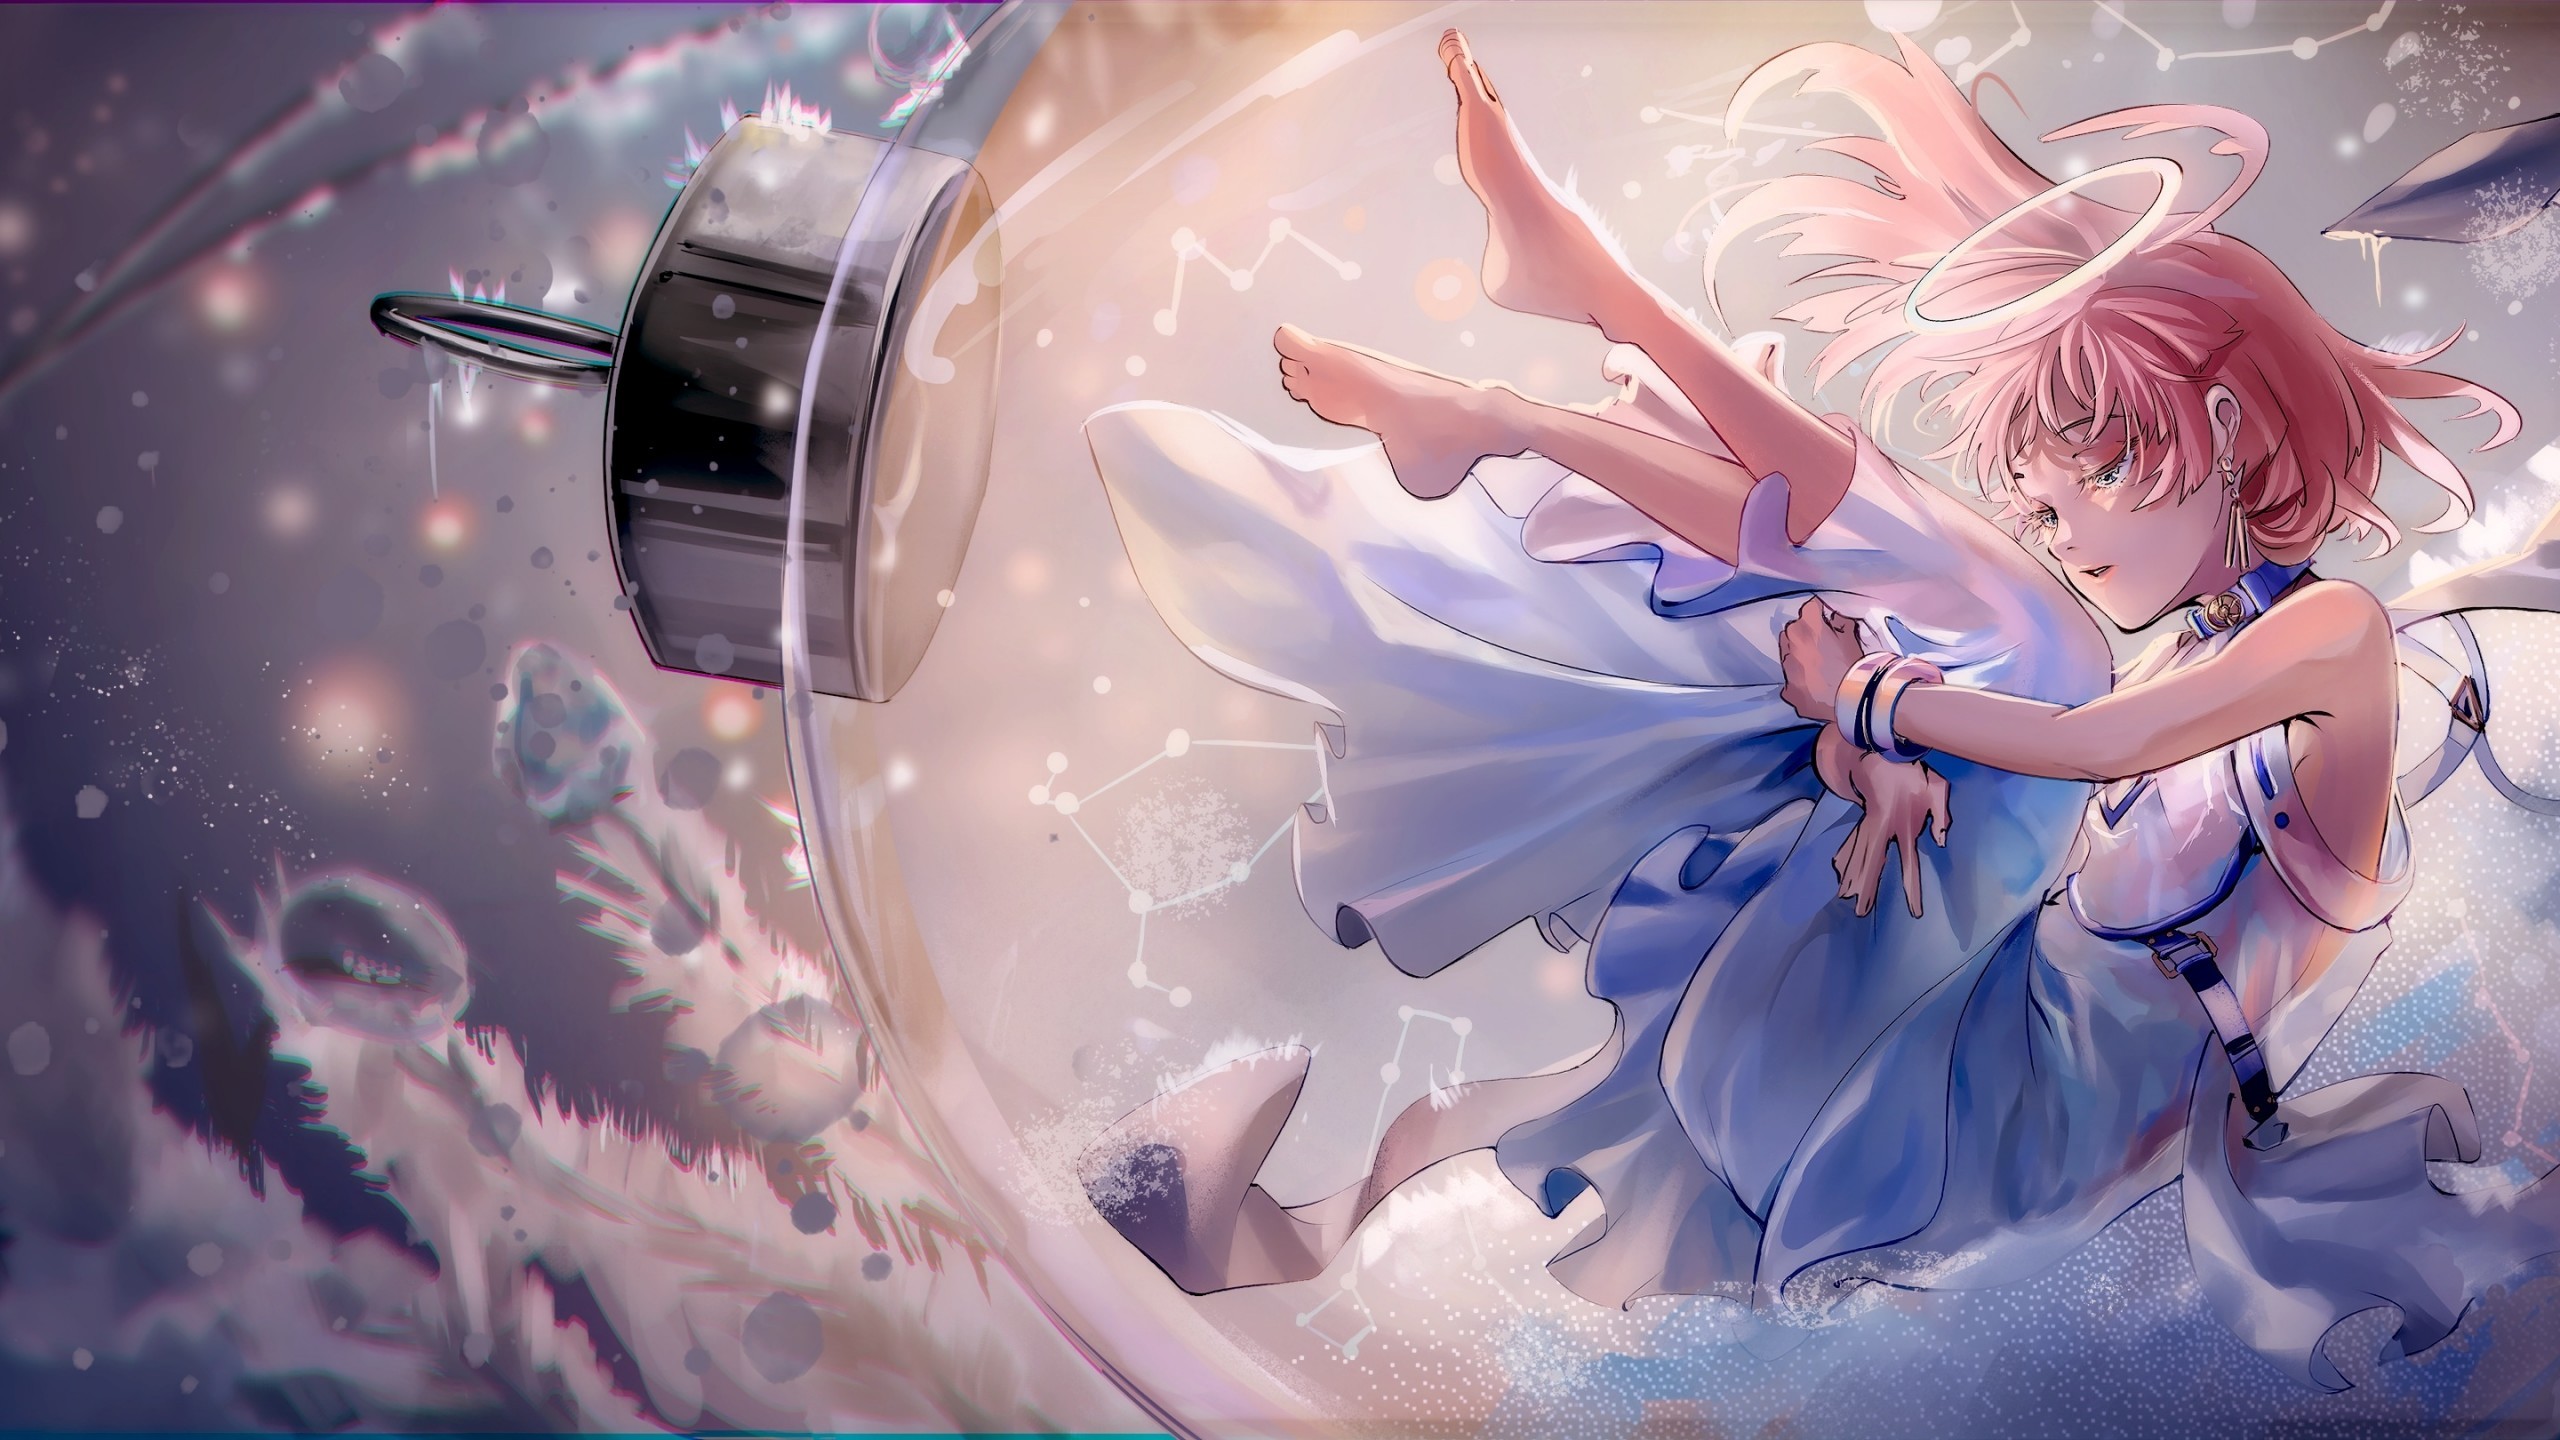 Download 2560x1440 Fallen Angel, Anime Girl, Pink Hair, Dress, Angel Ring Wallpaper for iMac 27 inch